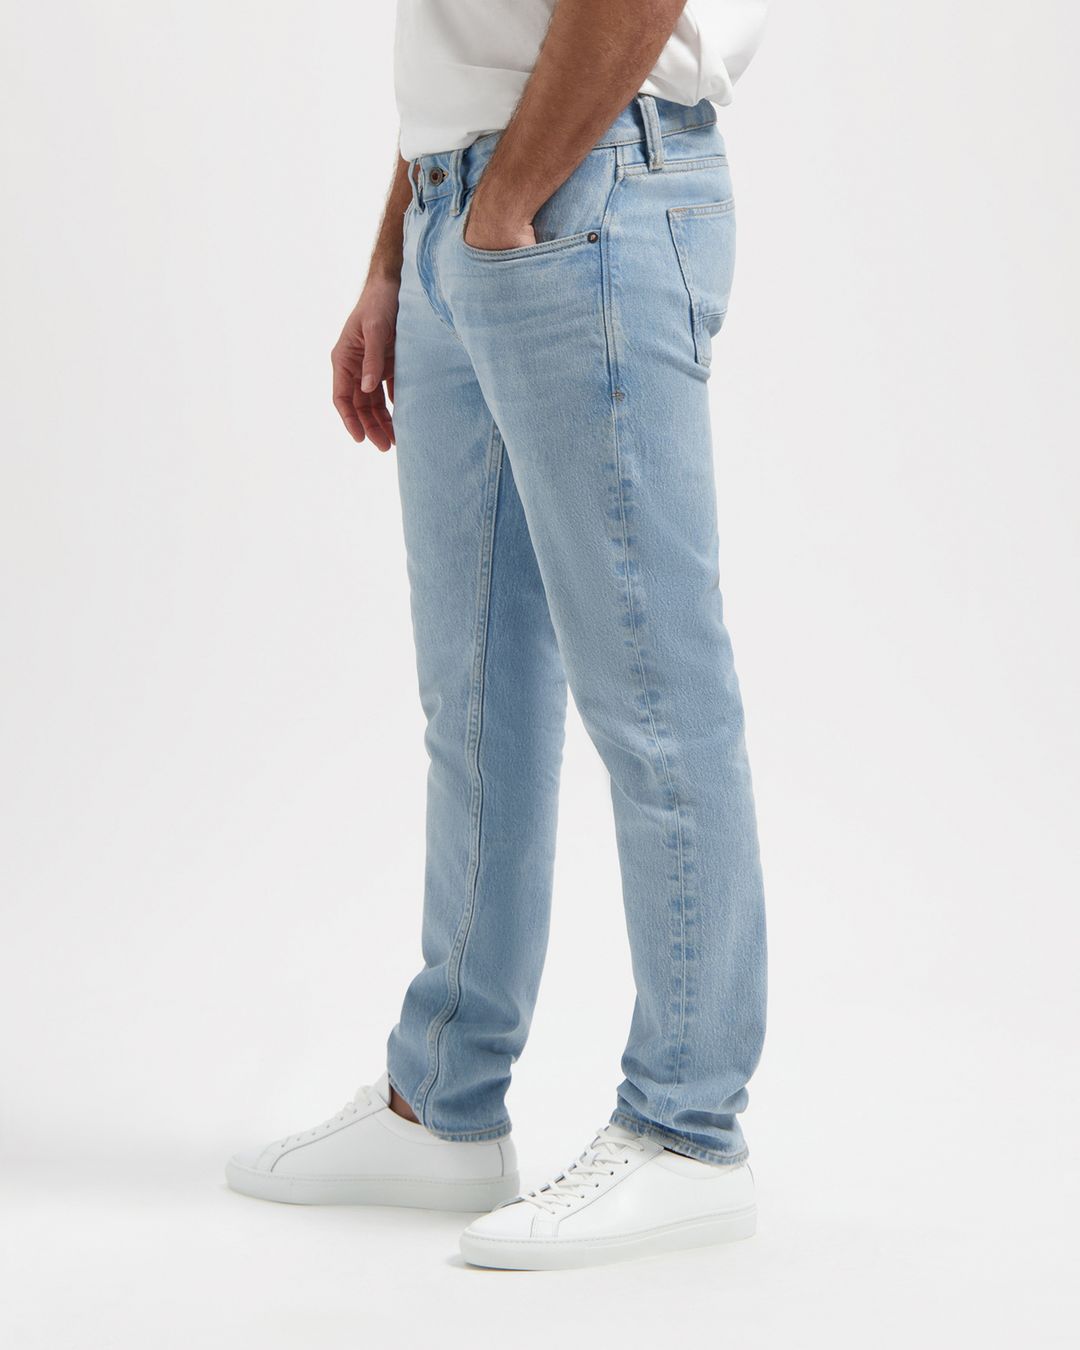 Jeans Nick Straight faded blue von Kuyichi